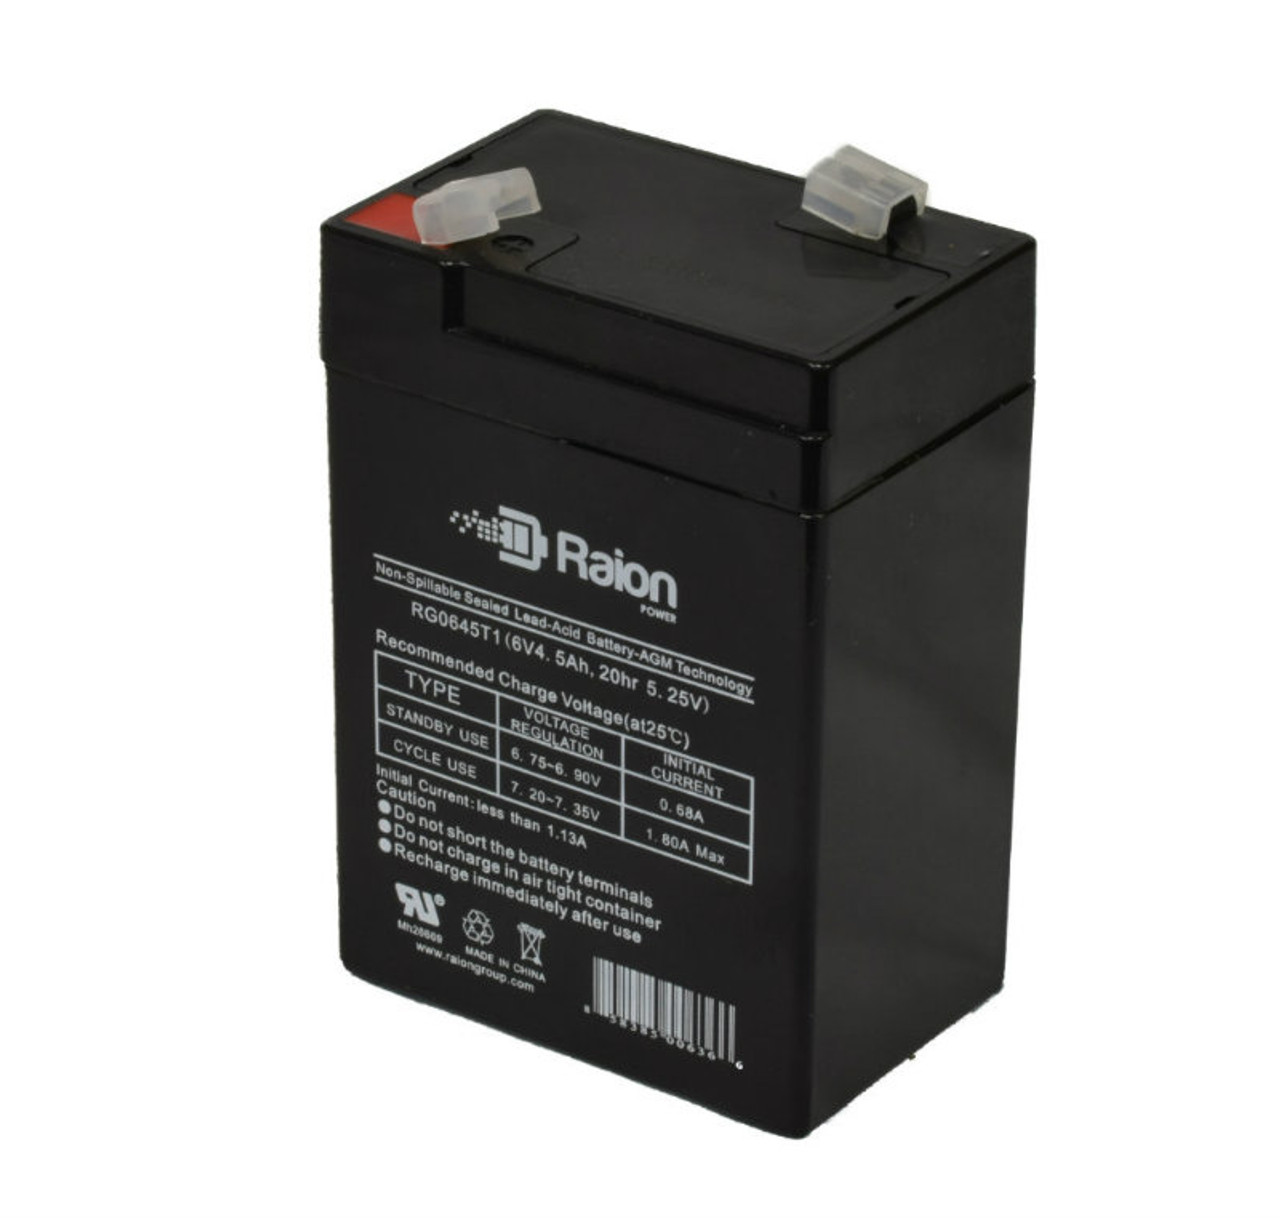 Raion Power RG0645T1 6V 4.5Ah Replacement Battery Cartridge for Yuasa NP4.5-6